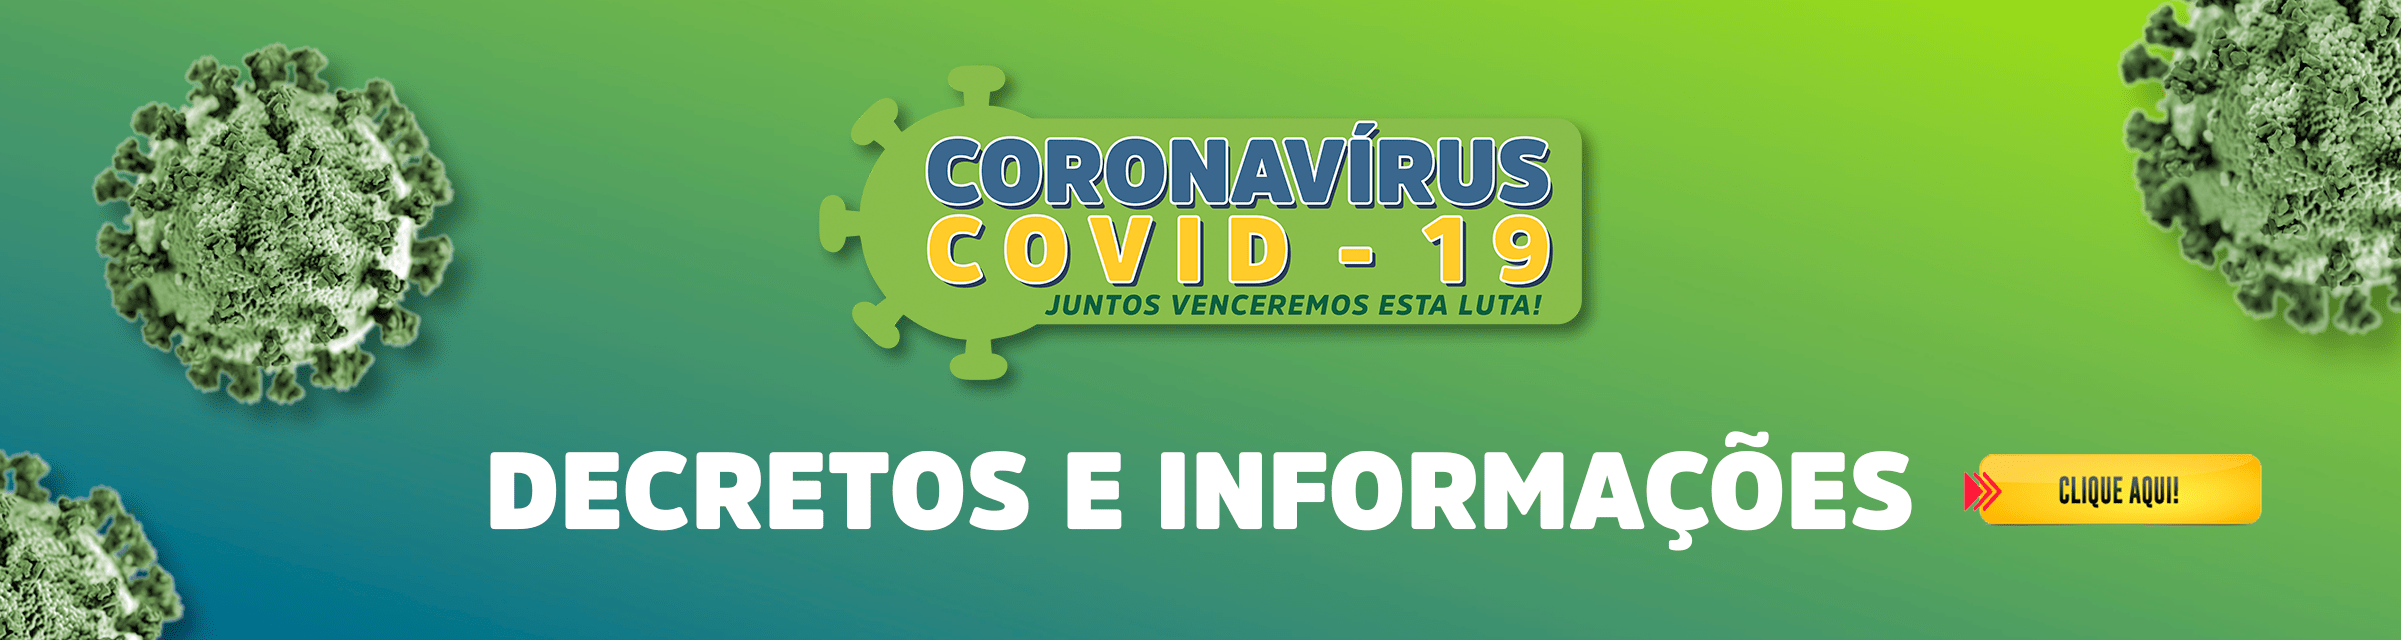 Decretos Coronavírus